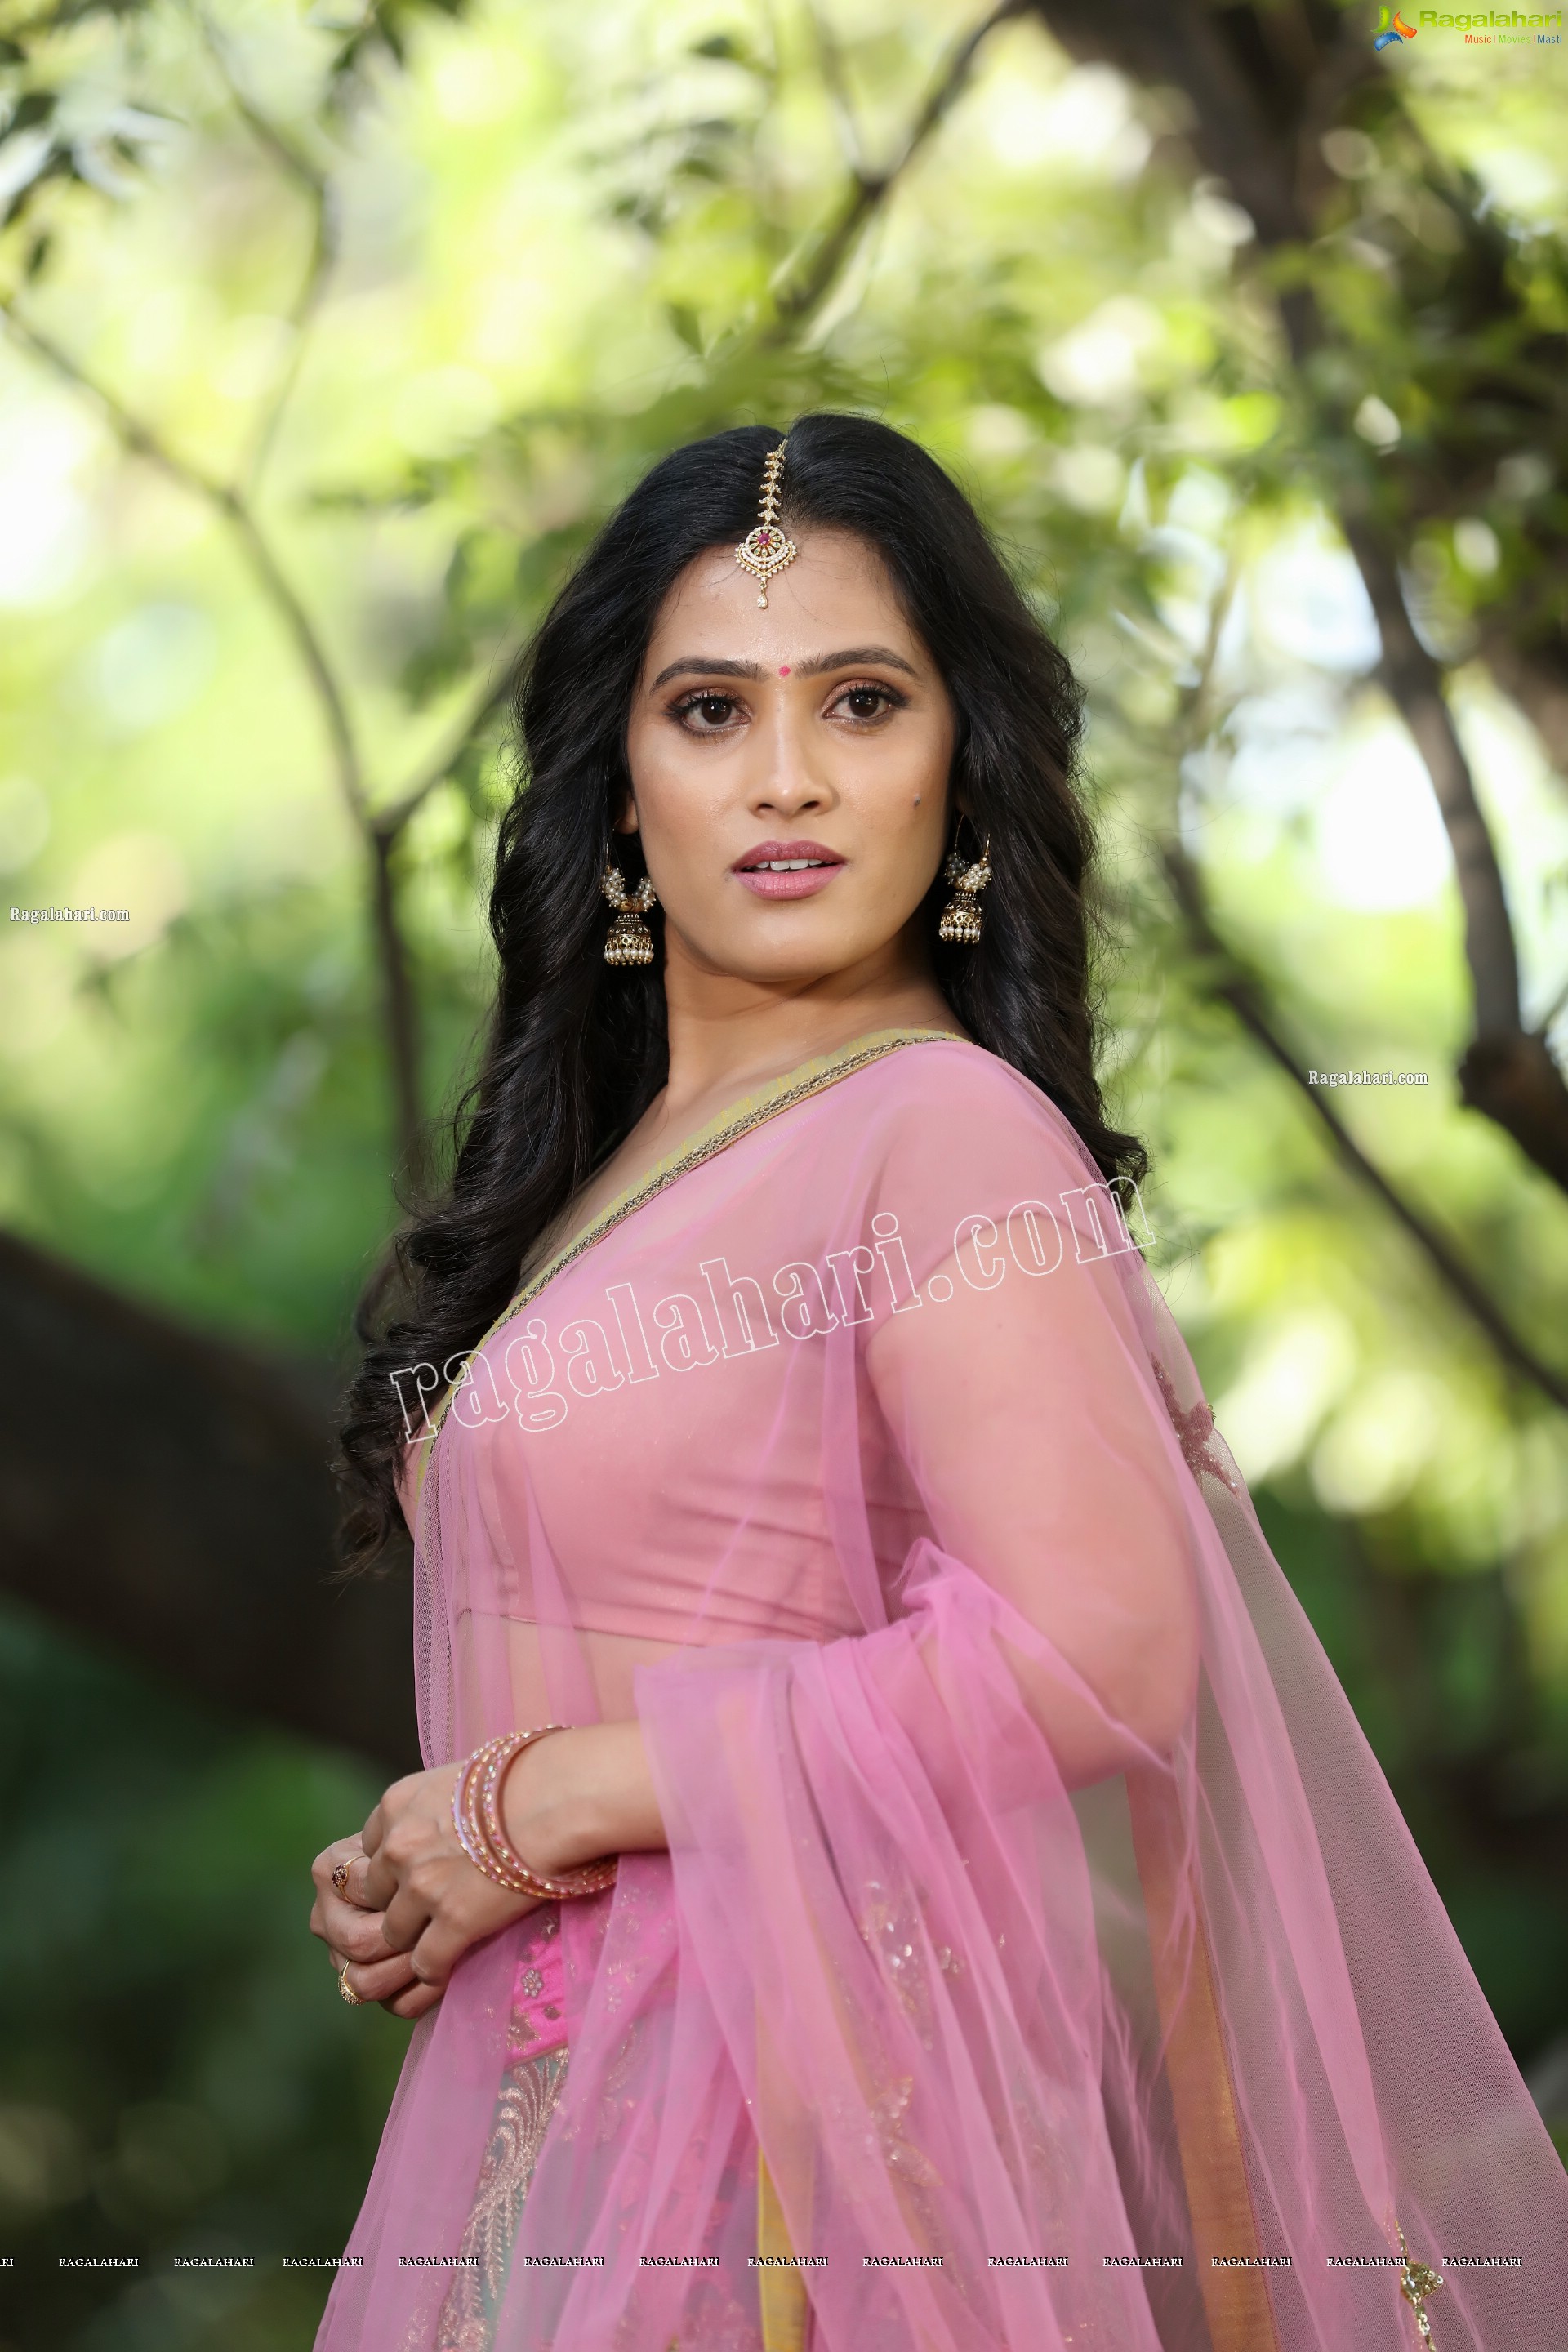 Anusha Parada in Pink and Green Embellished Lehenga Choli, Exclusive Photo Shoot